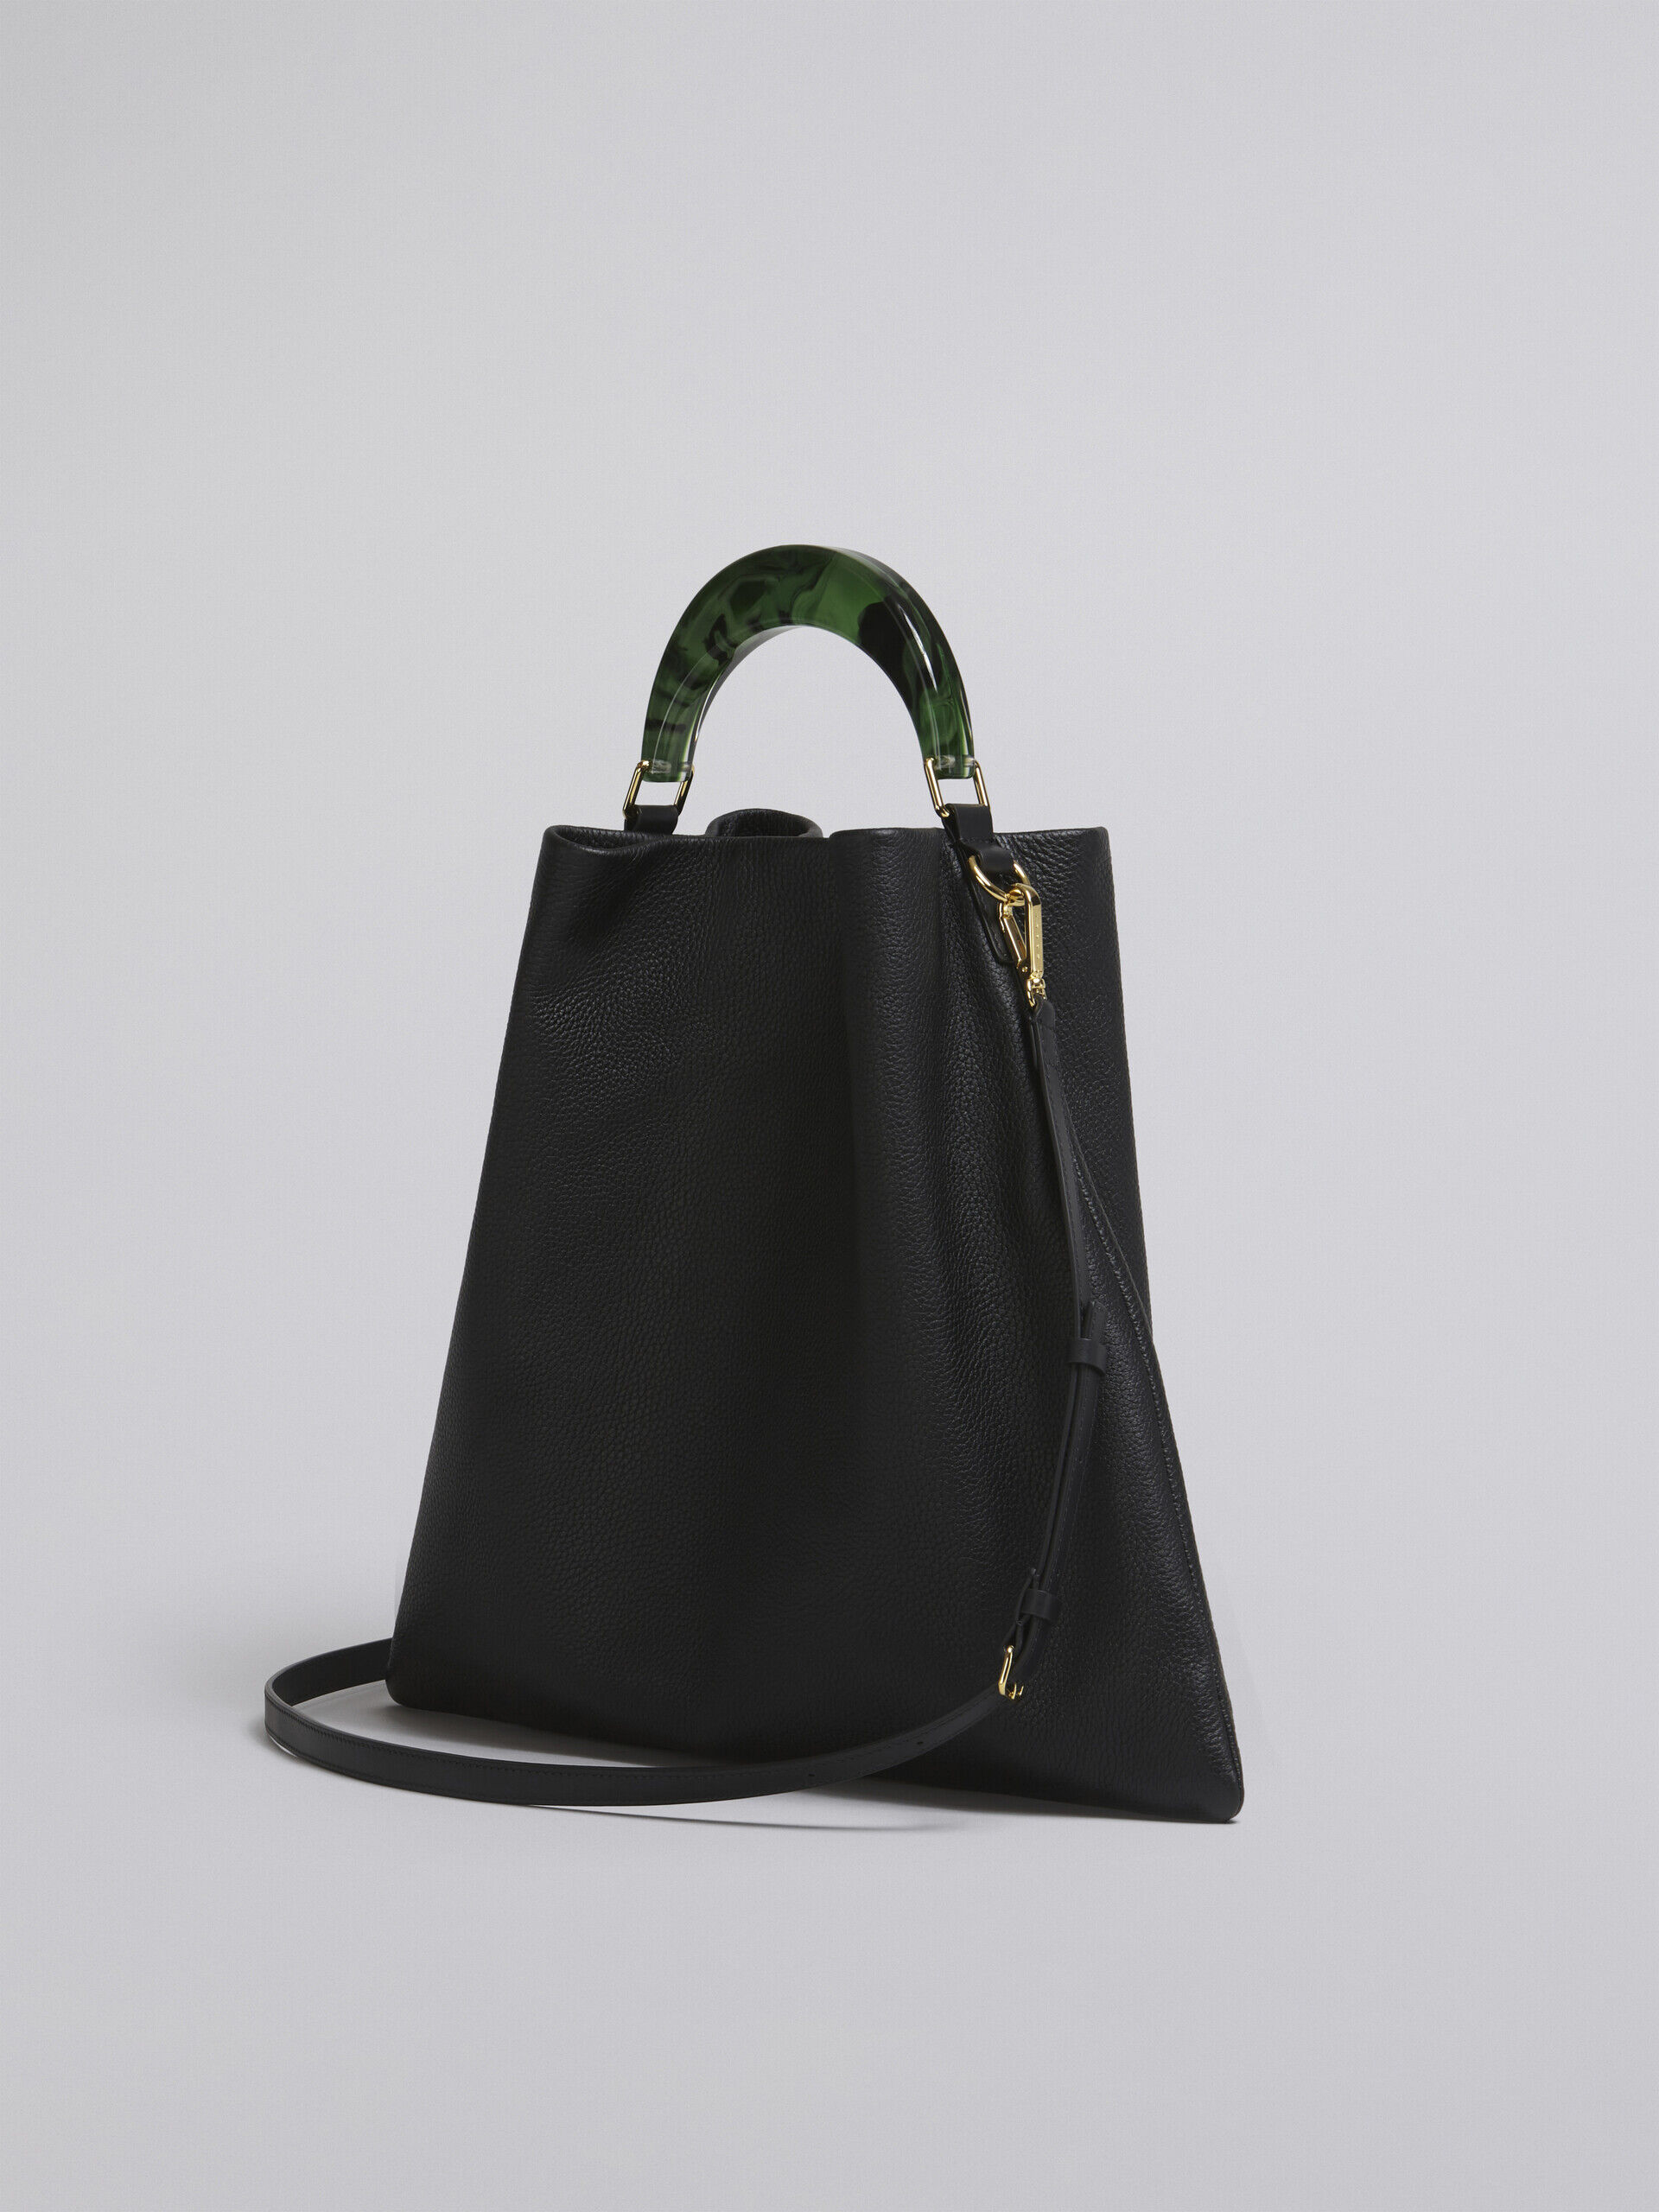 Venice Medium Bag in black leather | Marni